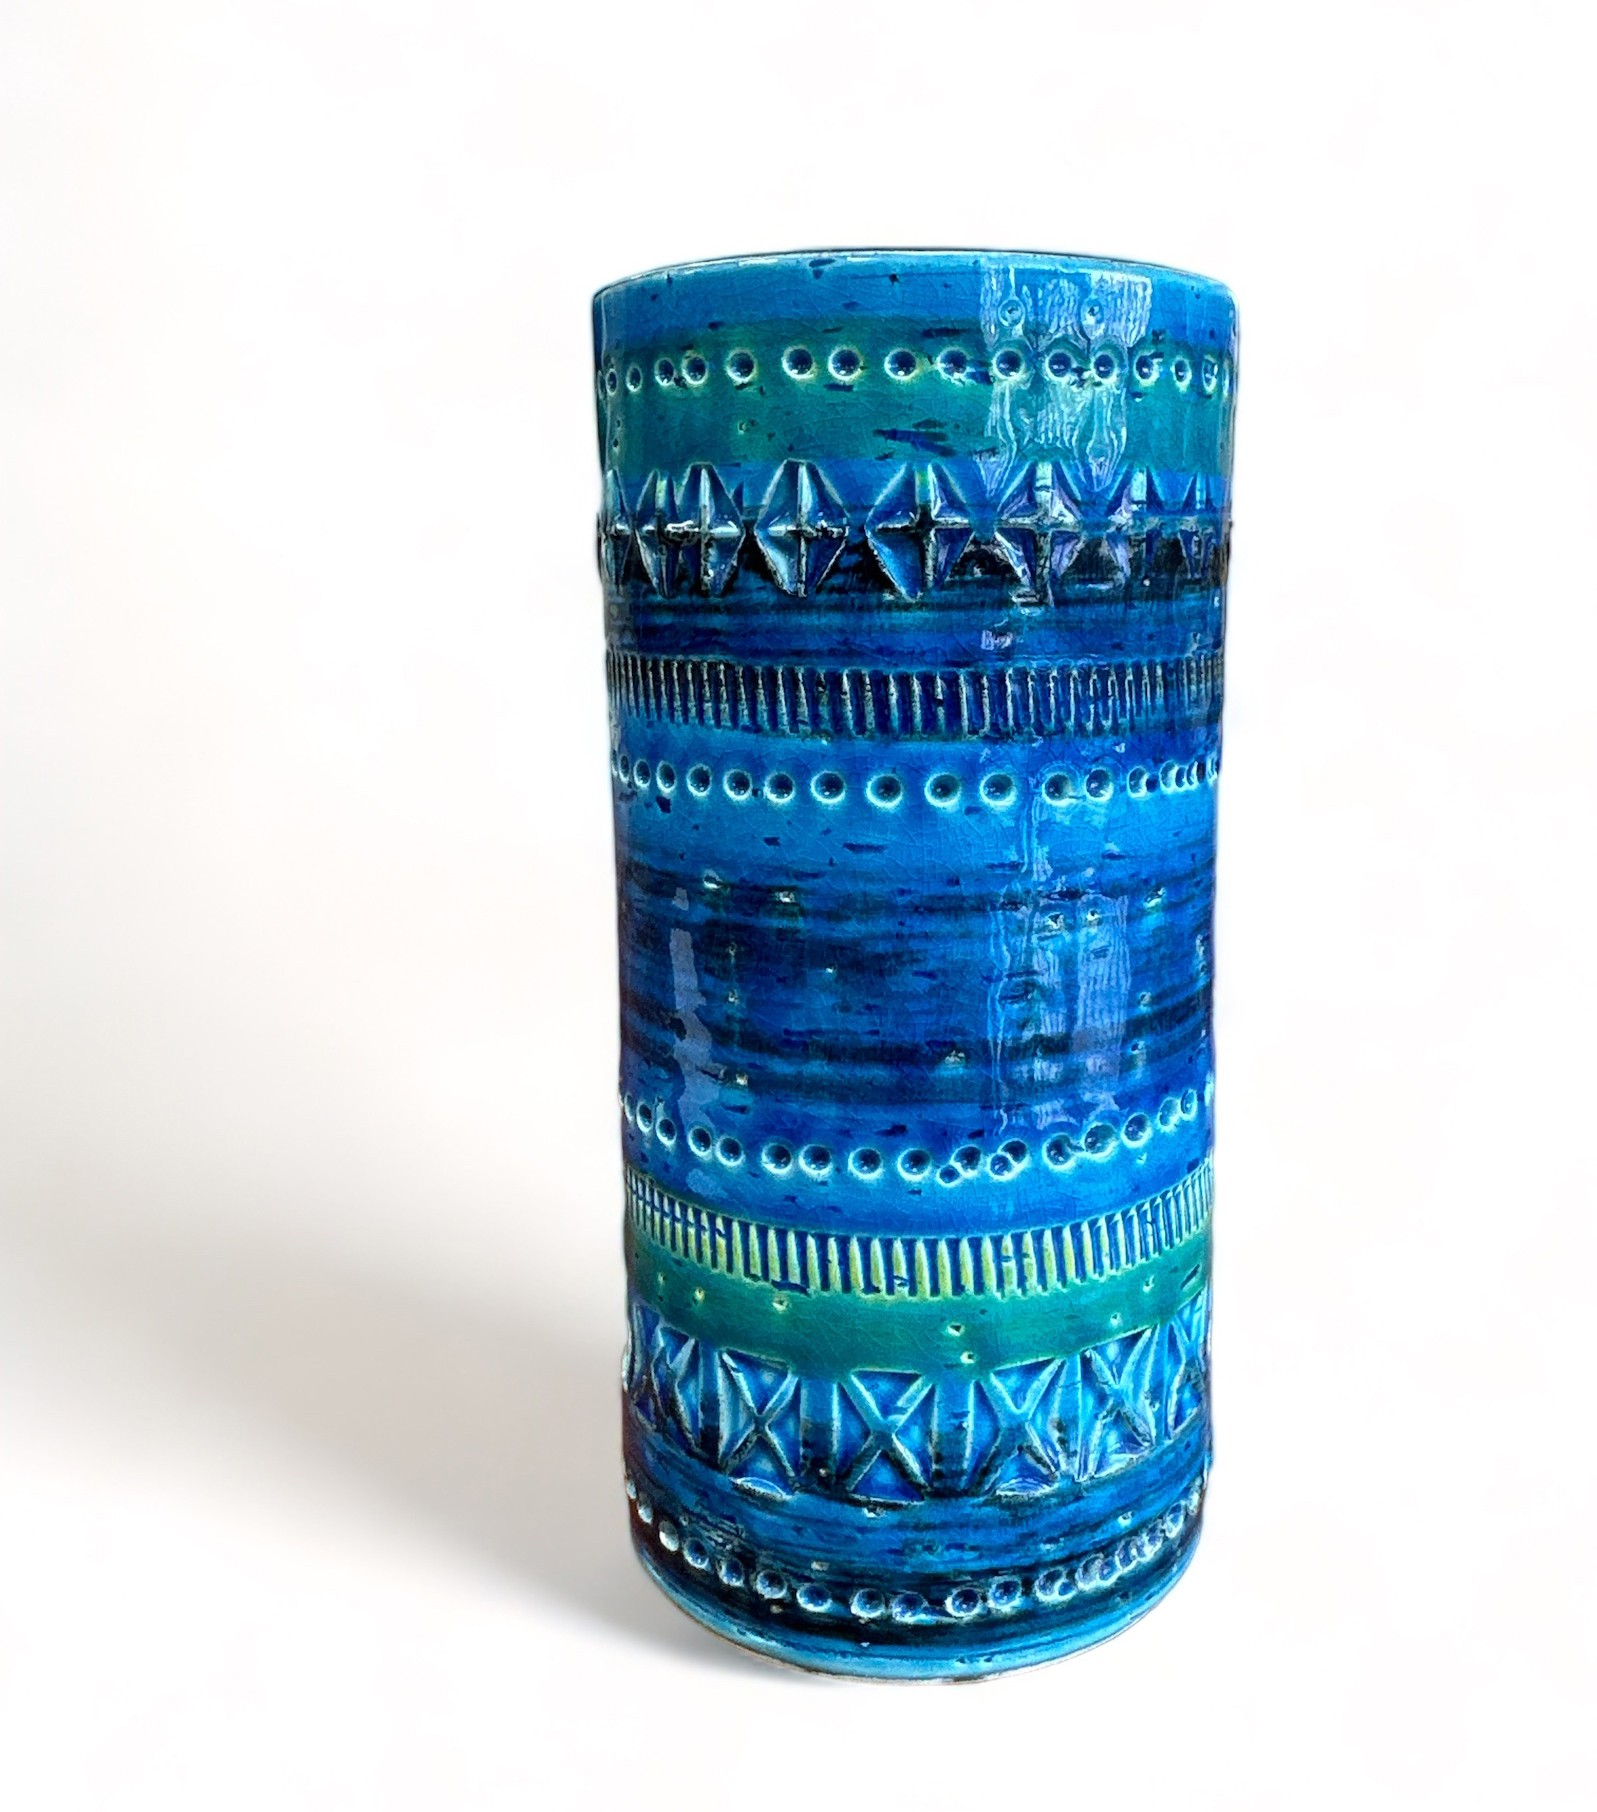 Sardartis Castelsardo, vintage Italian blue studio ceramic vase with banding pattern. Impressed to